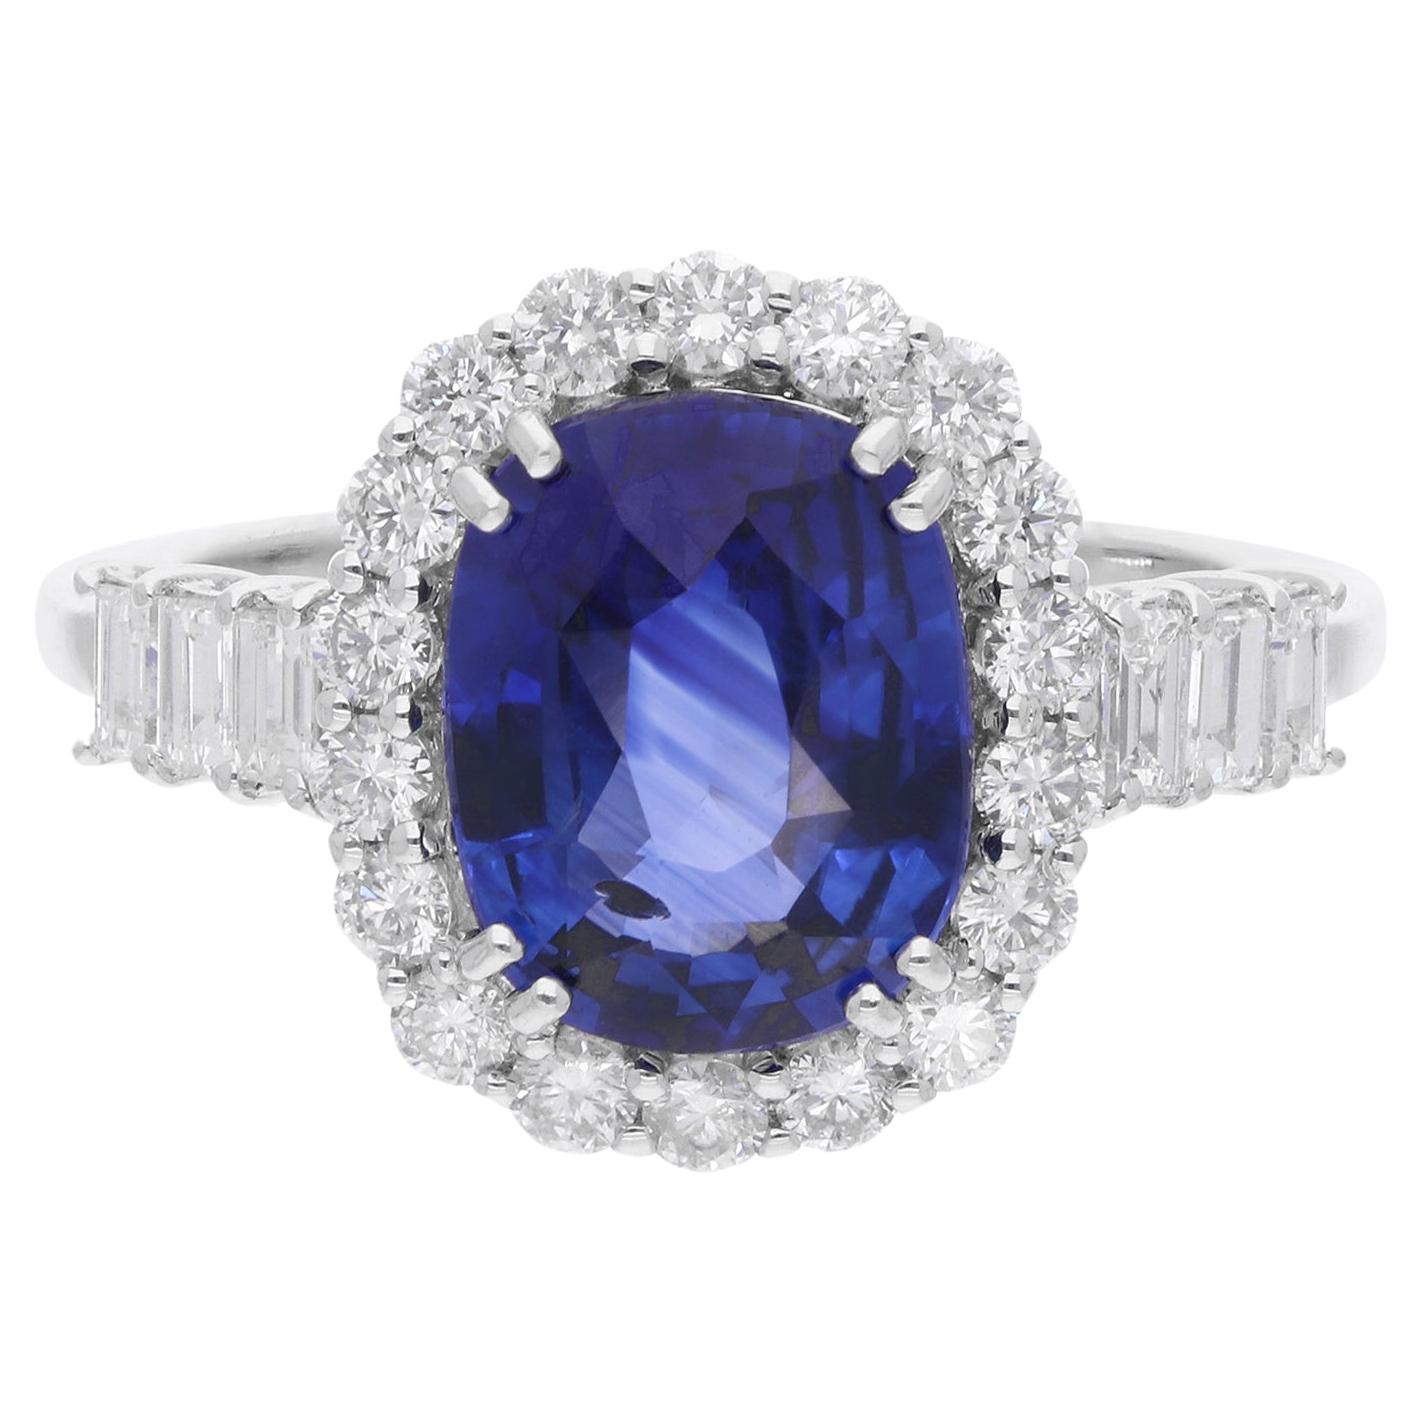 Blue Sapphire Cocktail Ring Diamond 18 Karat White Gold Handmade Fine Jewelry